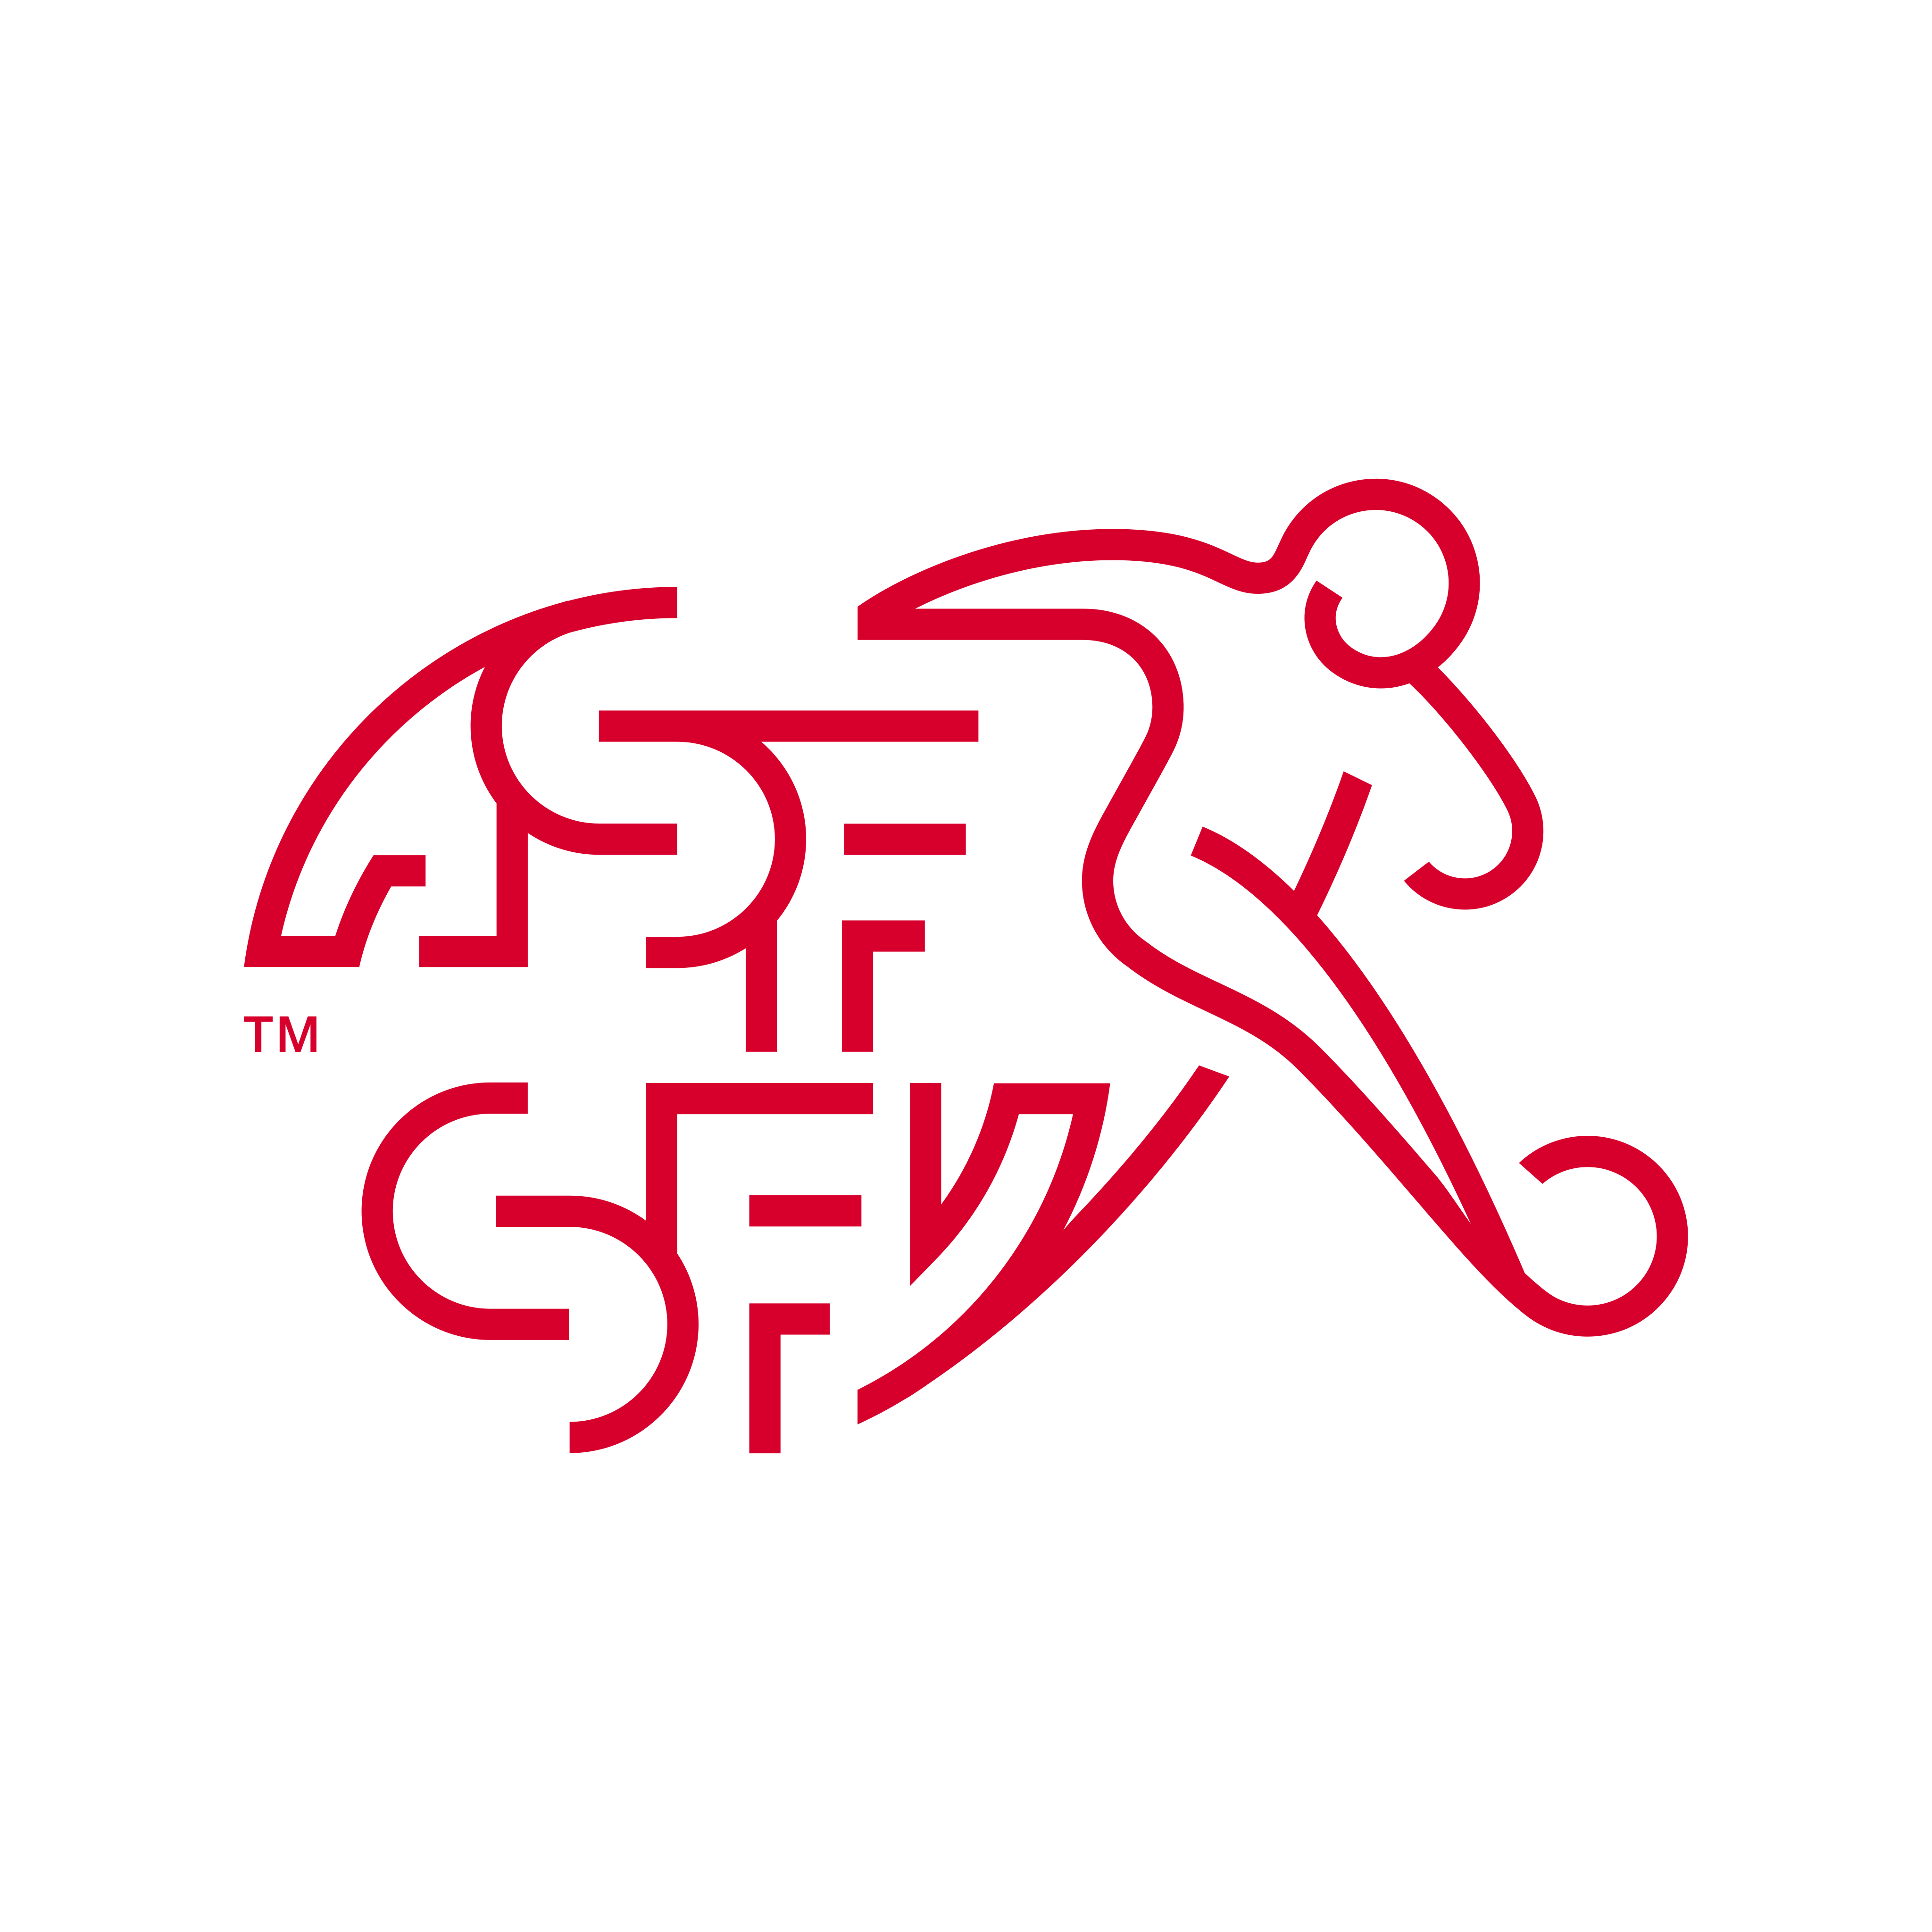 switzerland national football team logo 0 - Switzerland National Football Team Logo